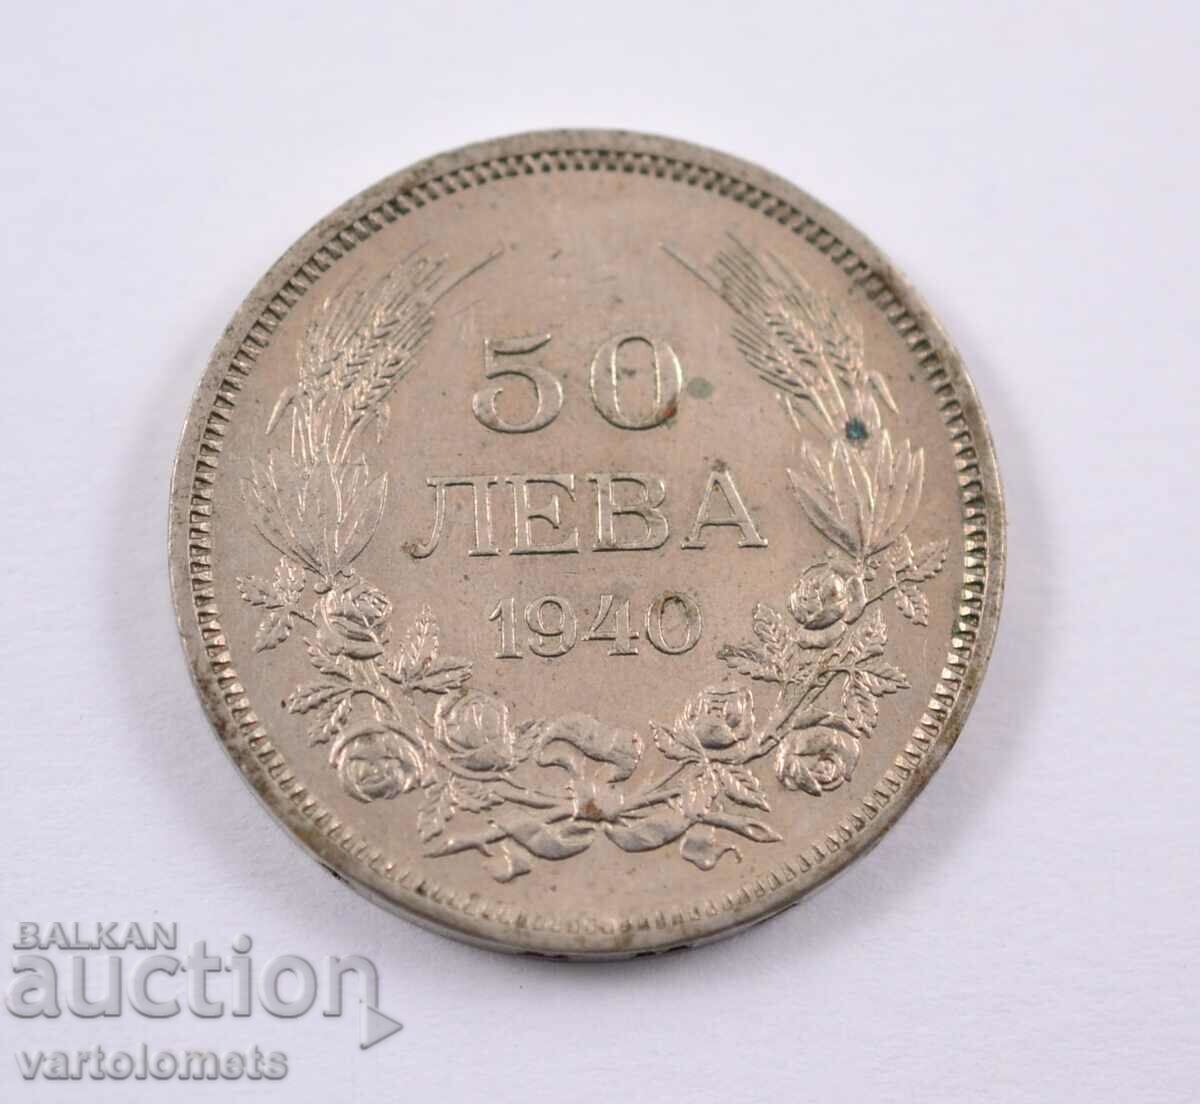 50 leva 1940 - Bulgaria